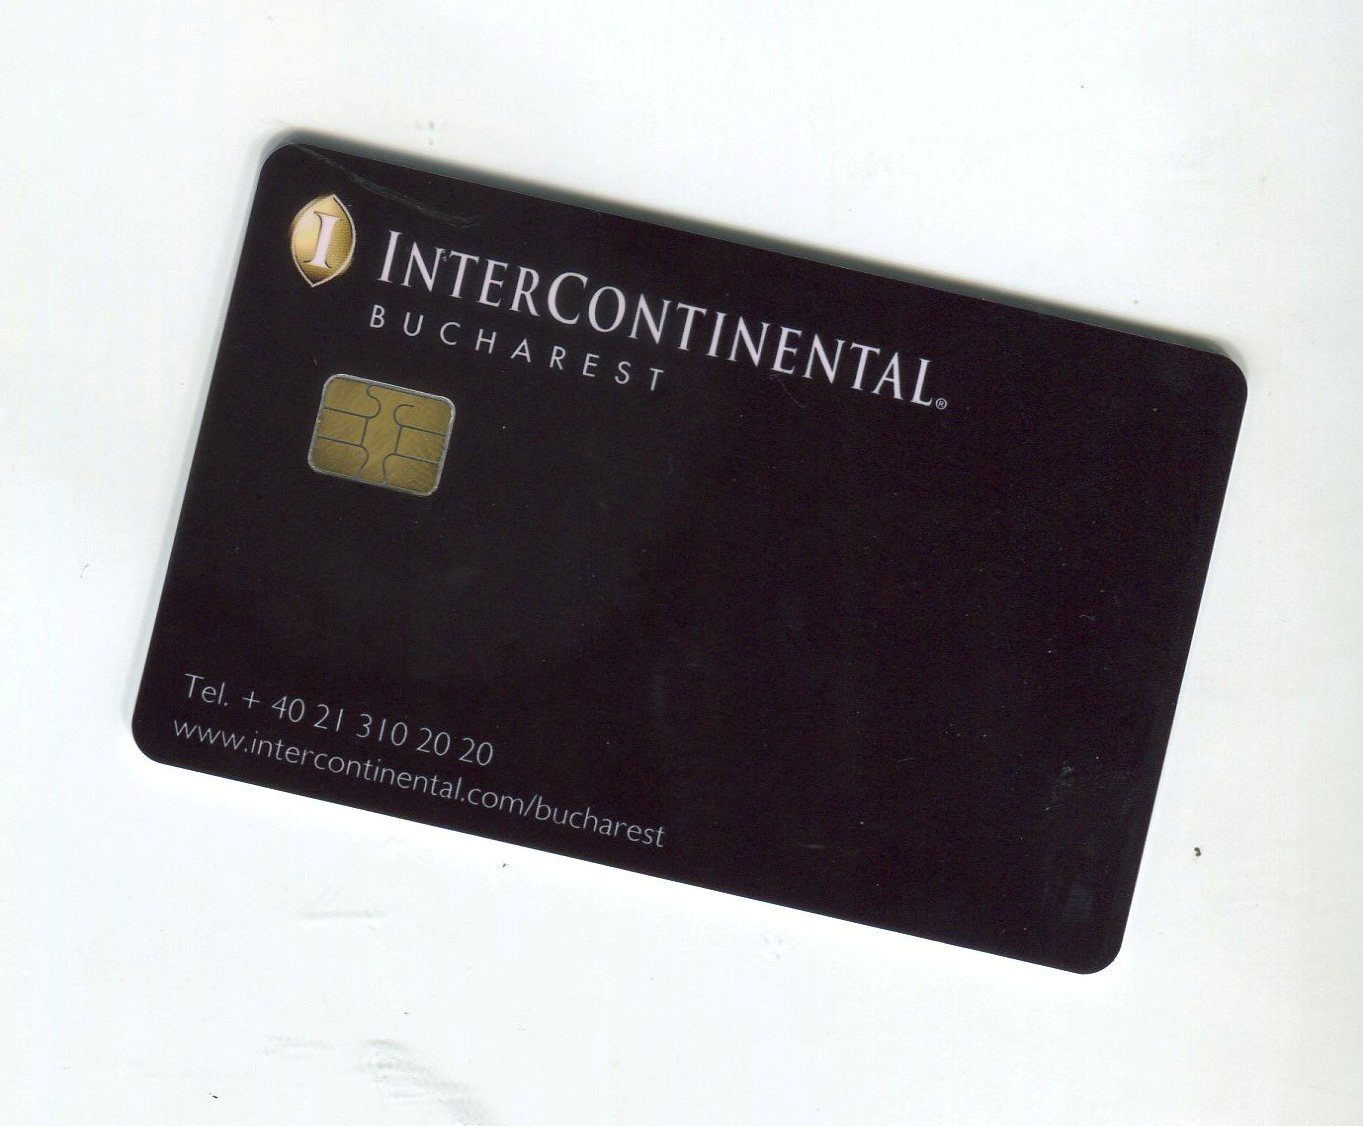 intercontinental hotel card